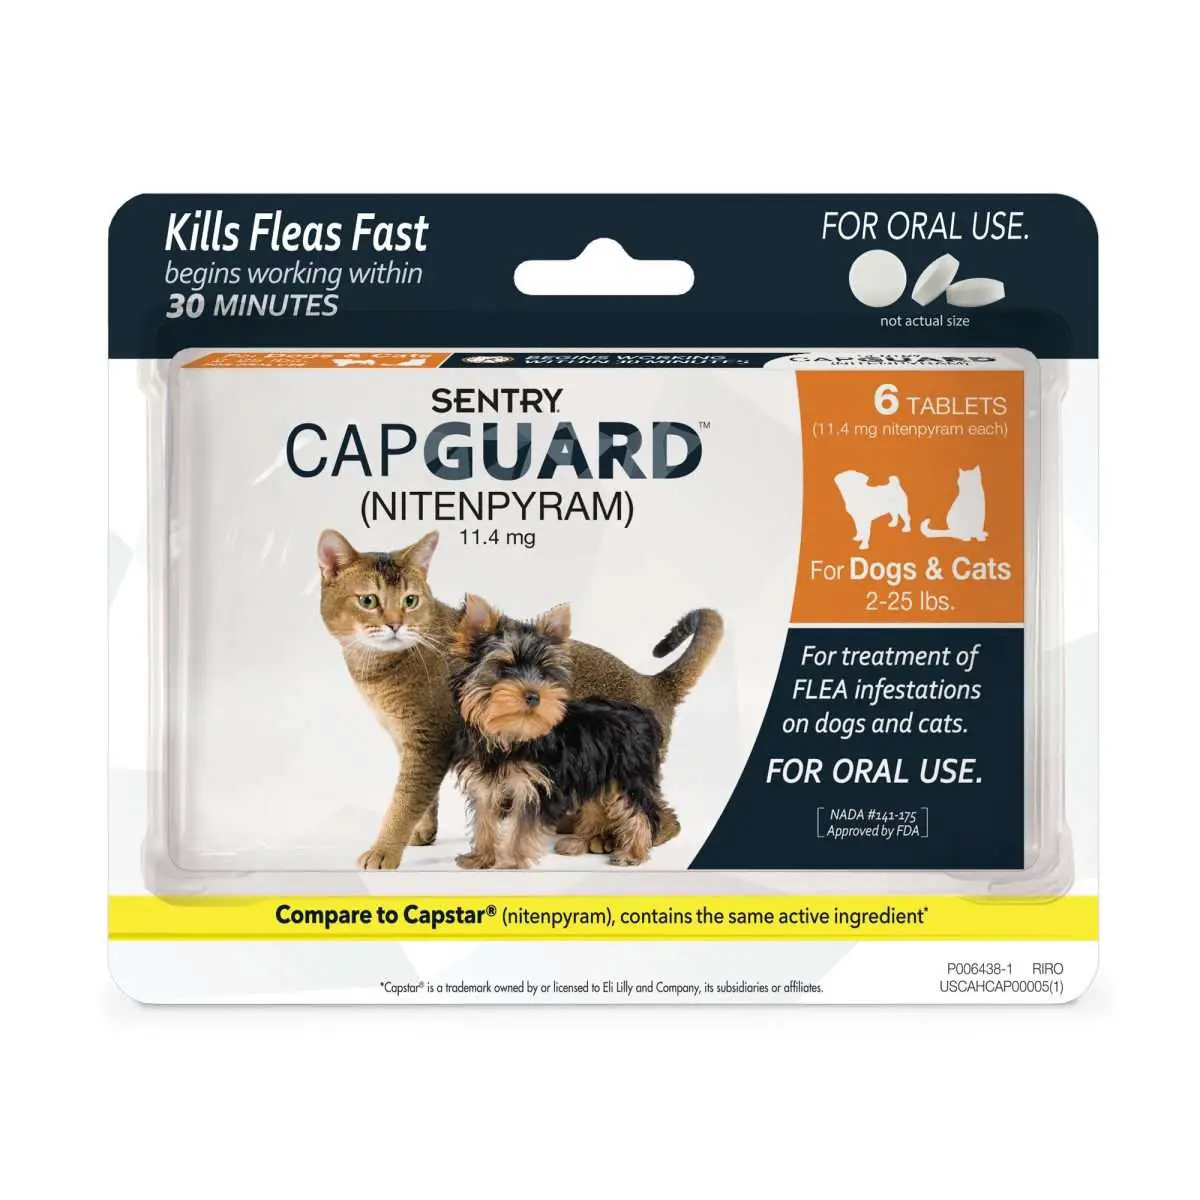 Sentry Capguard Flea Tablets for Cats 2 to 25 lbs.